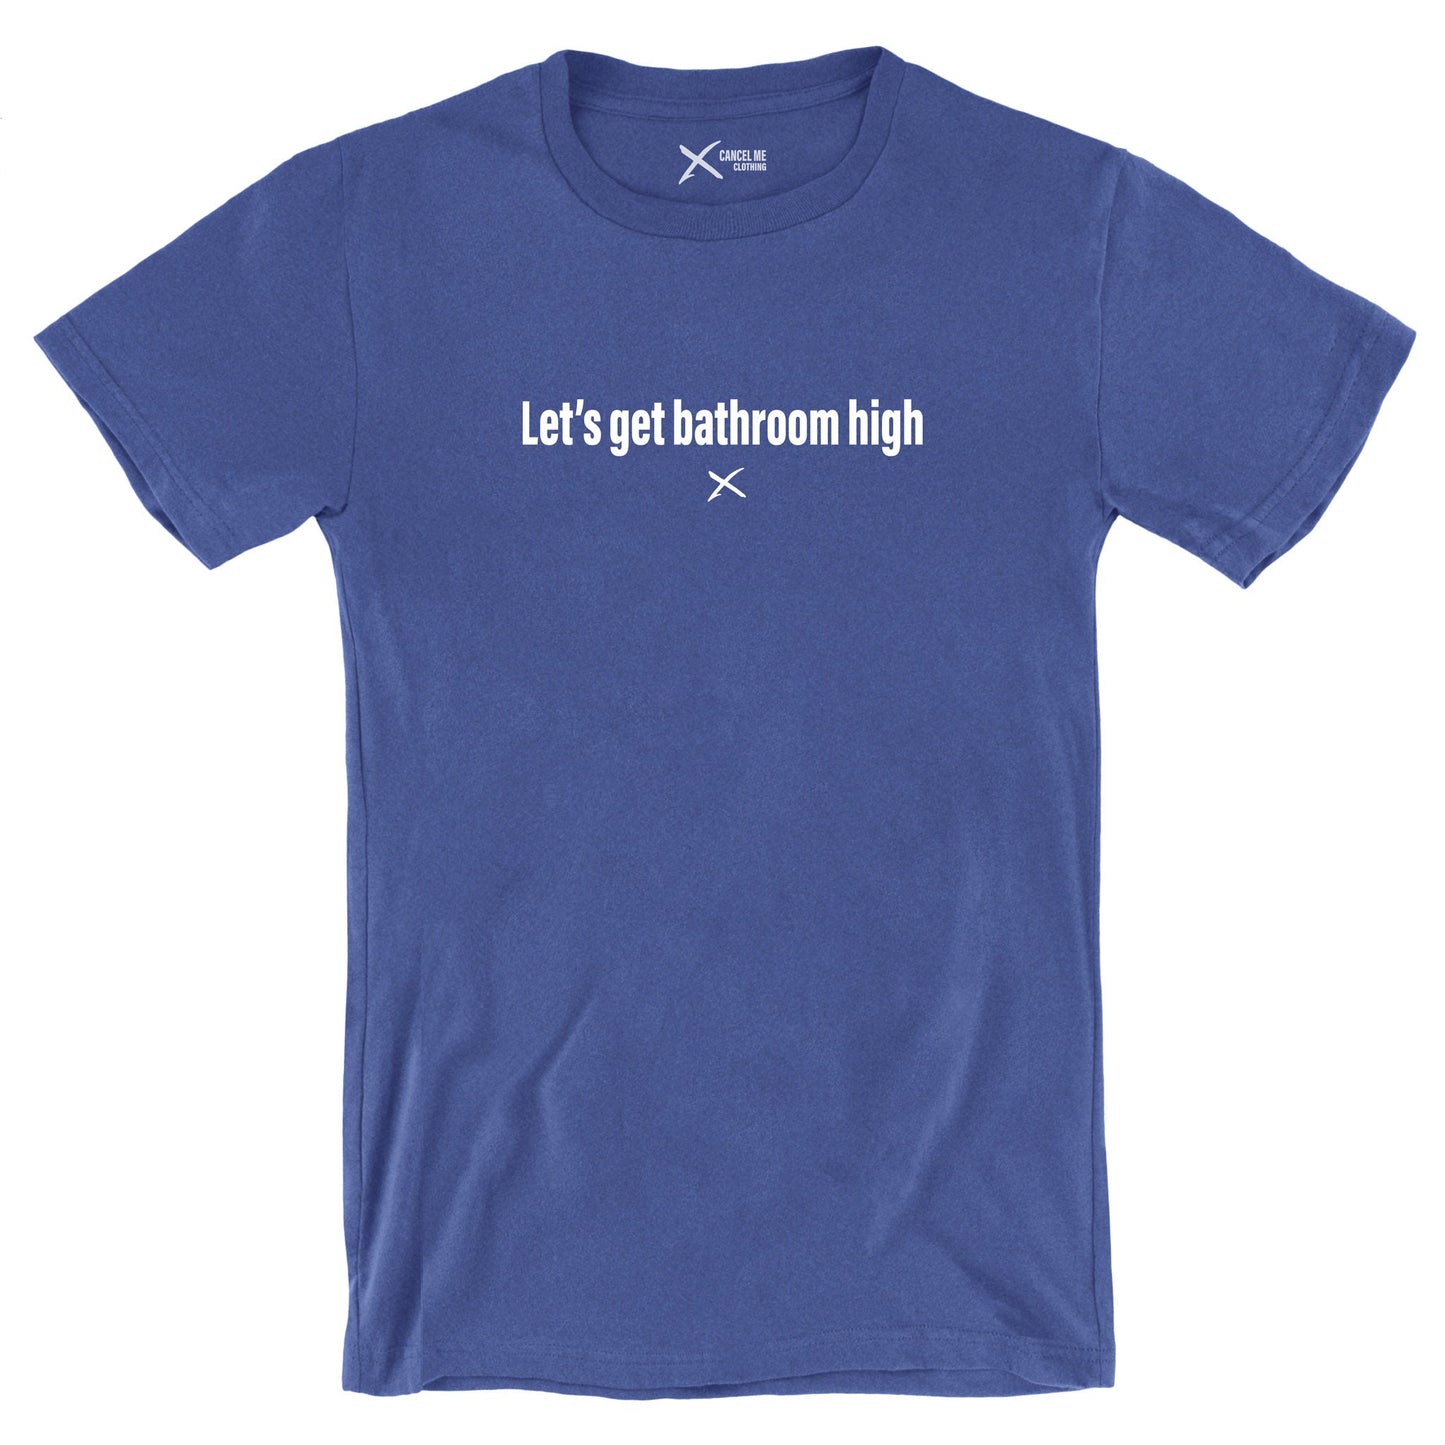 Let's get bathroom high - Shirt